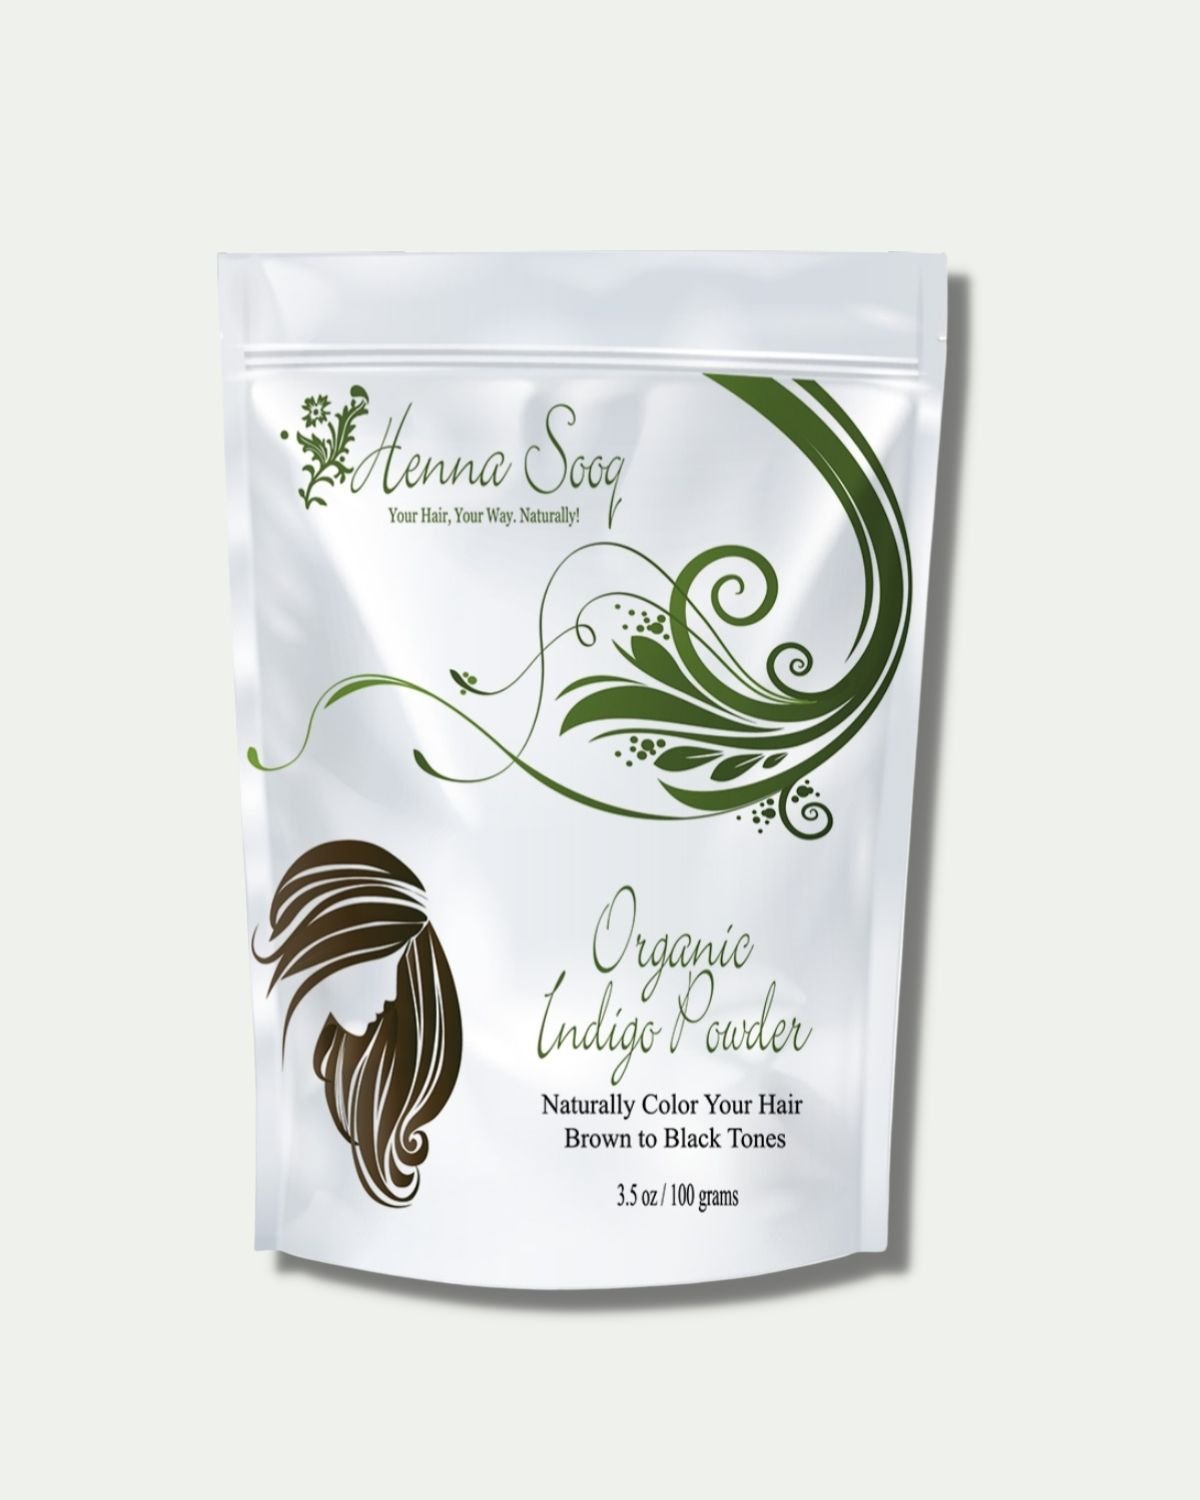 Organic Indigo Hair Dye - Henna Sooq